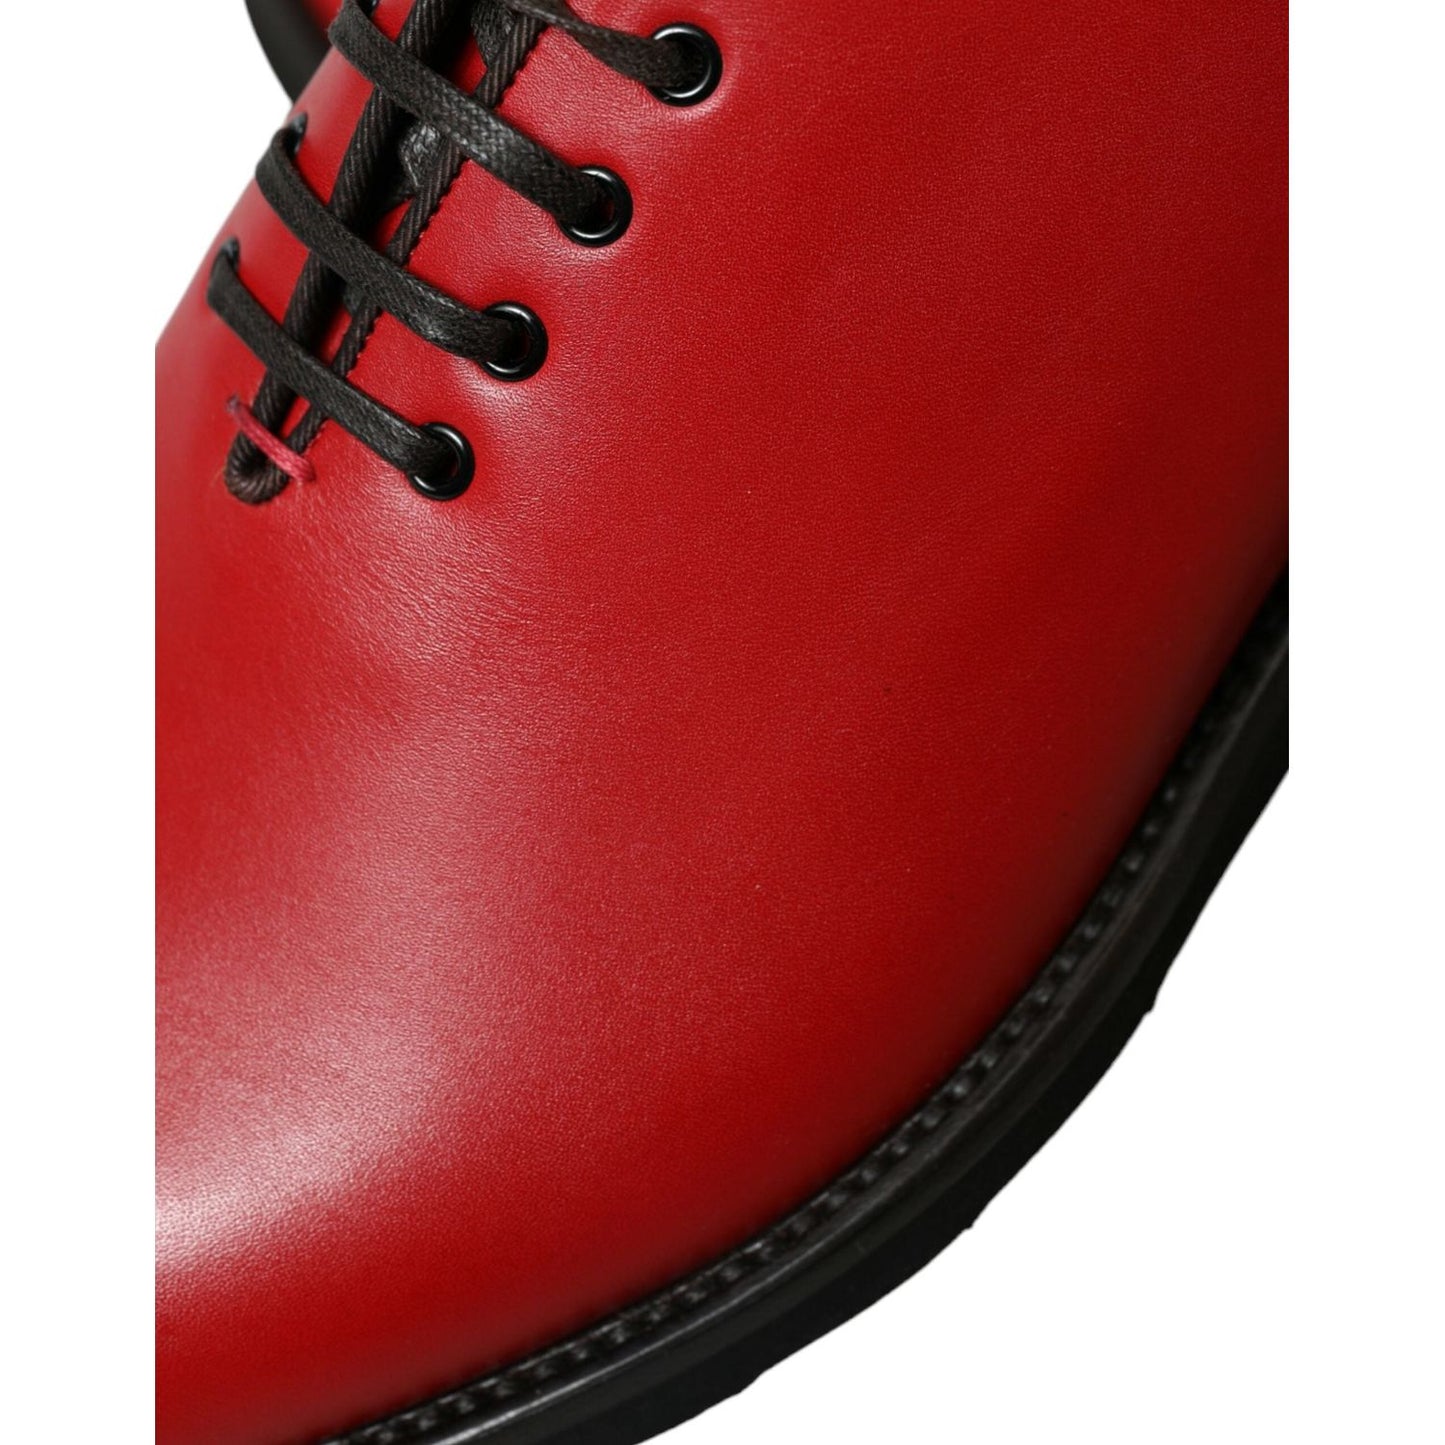 Dolce & Gabbana Elegant Red Leather Oxford Dress Shoes red-leather-lace-up-oxford-men-dress-shoes